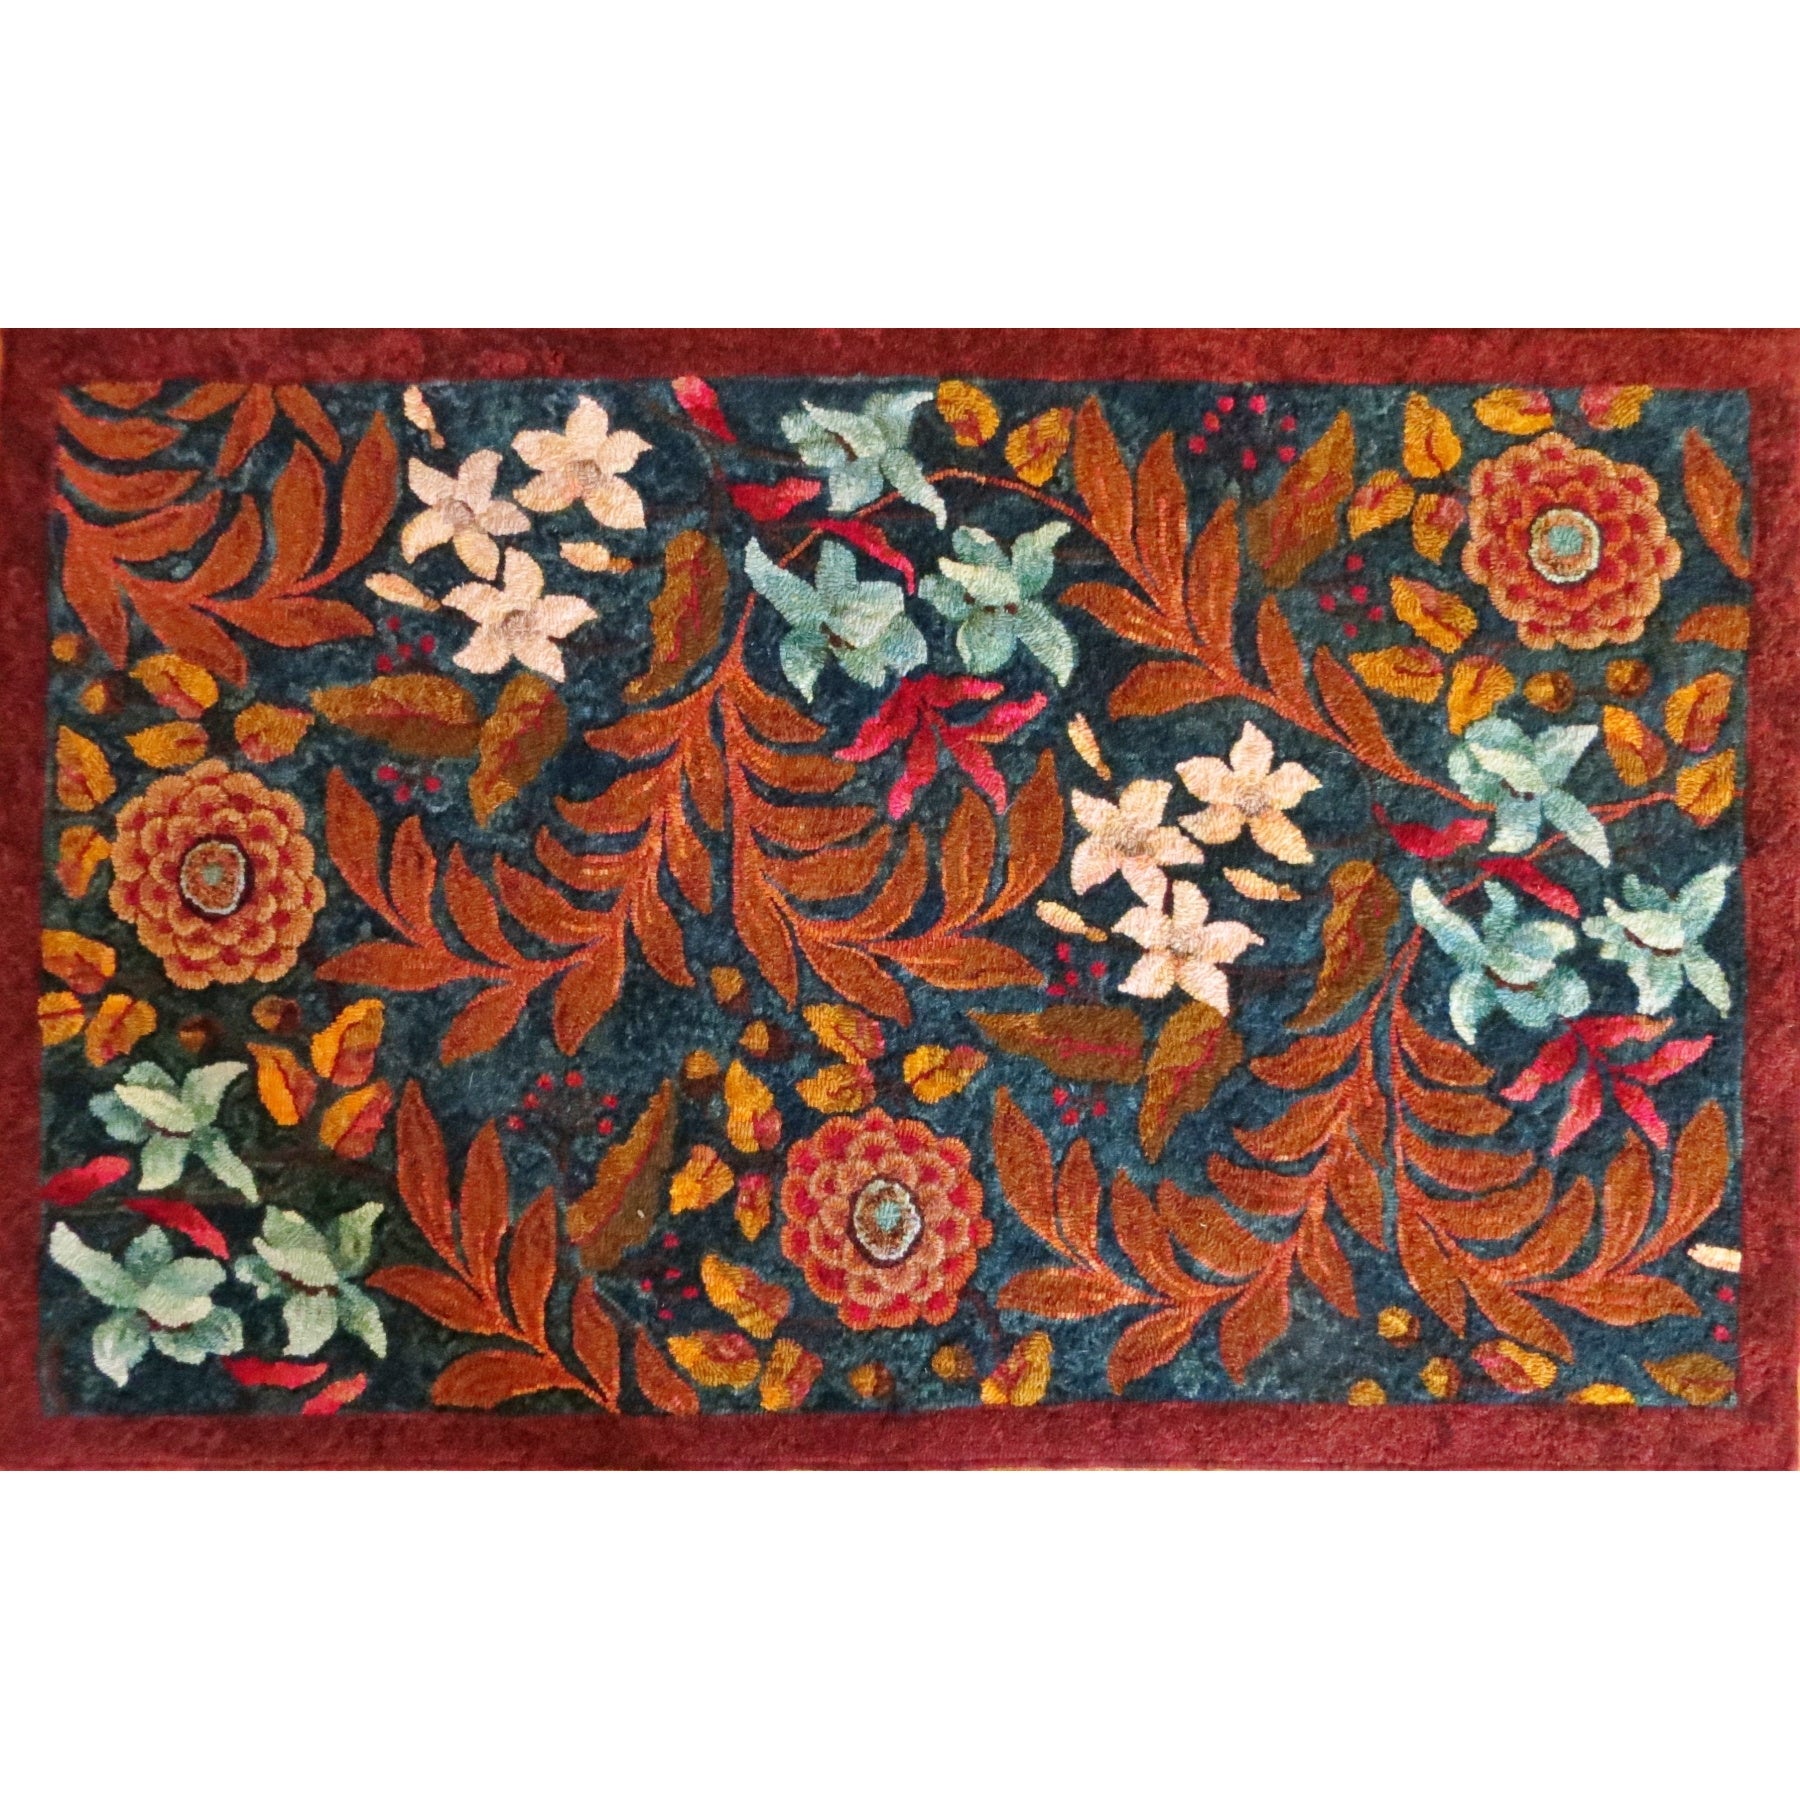 Larkspur Chintz, rug hooked by Juliana Kapusta